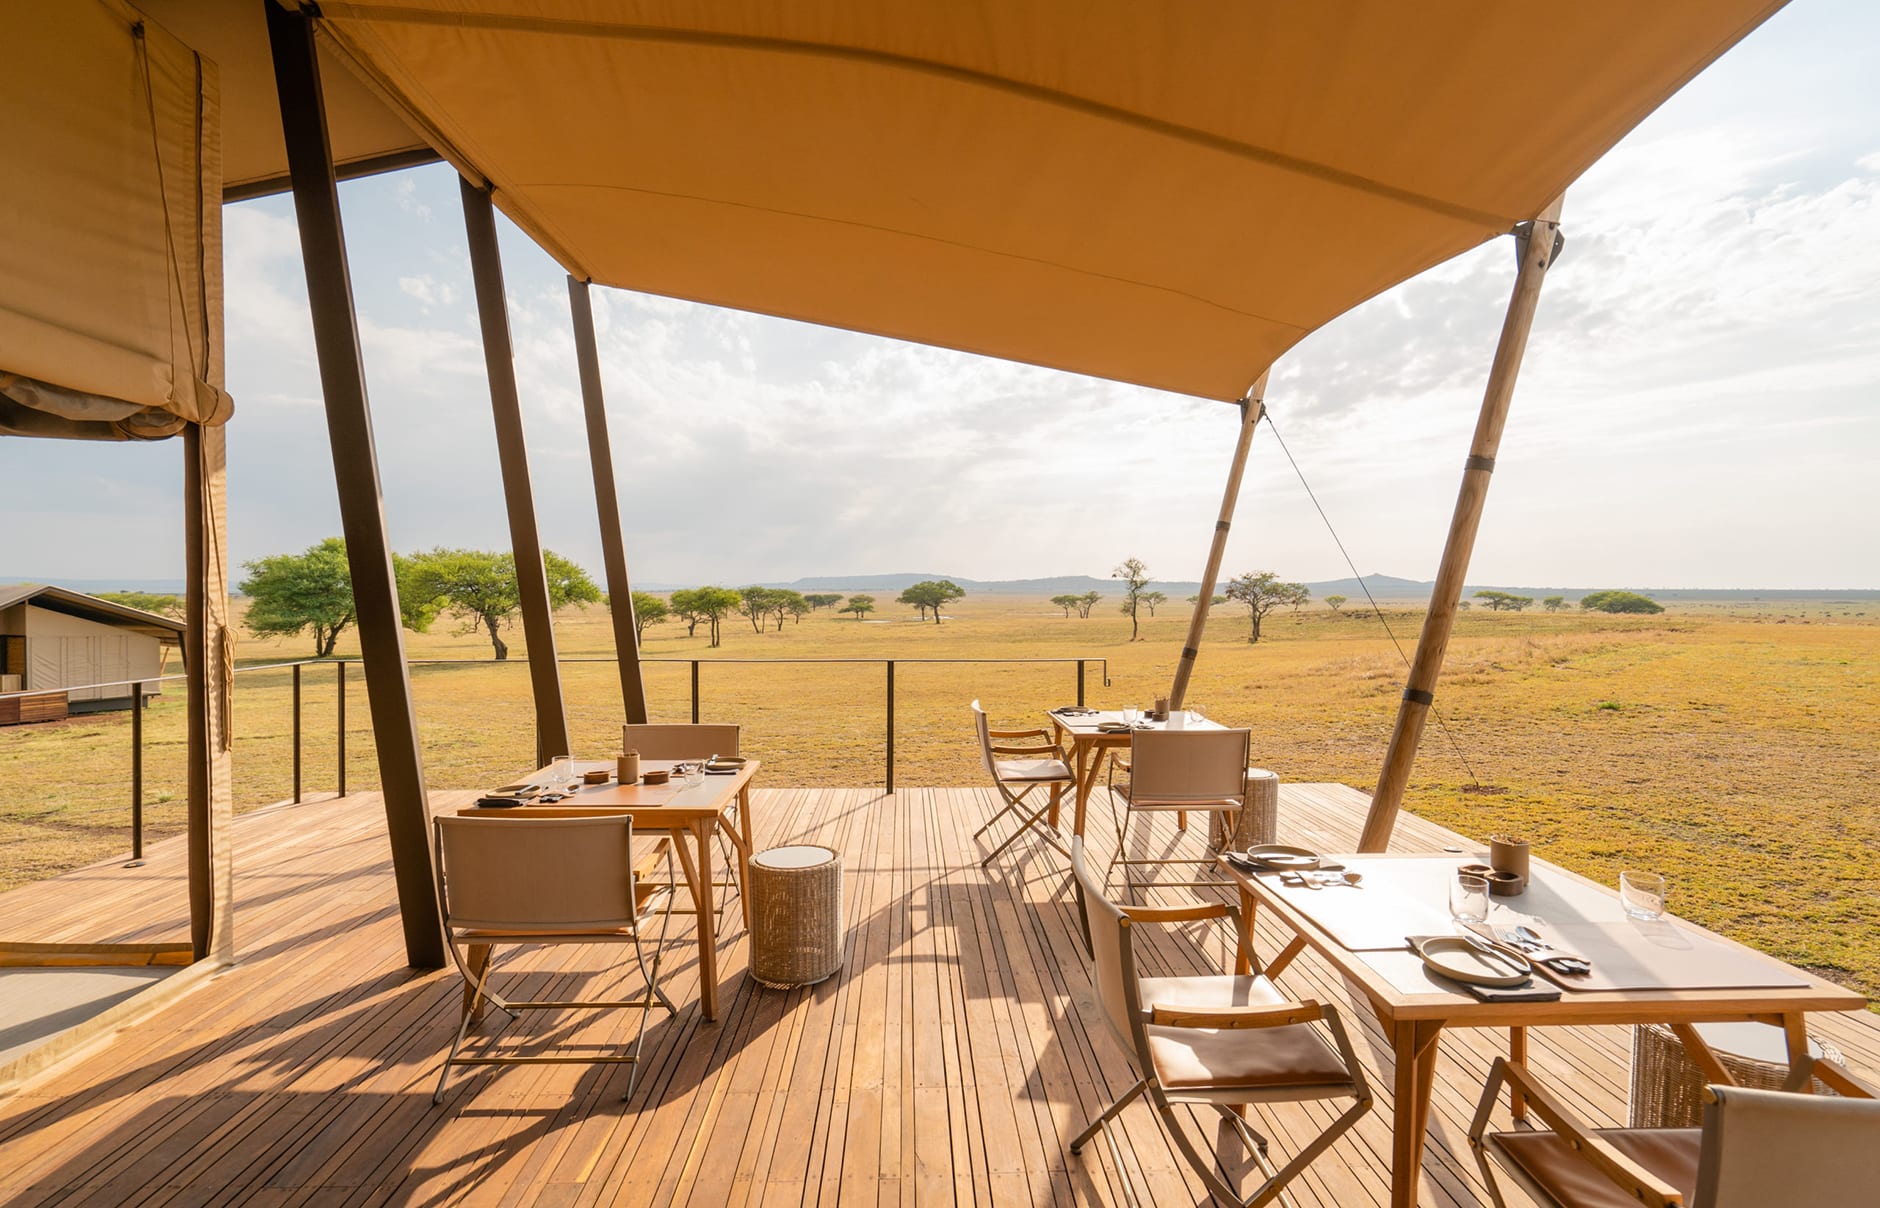 Singita Sabora Tented Camp - Grumeti Serengeti, Tanzania. Hotel Review by TravelPlusStyle. Photo © Singita